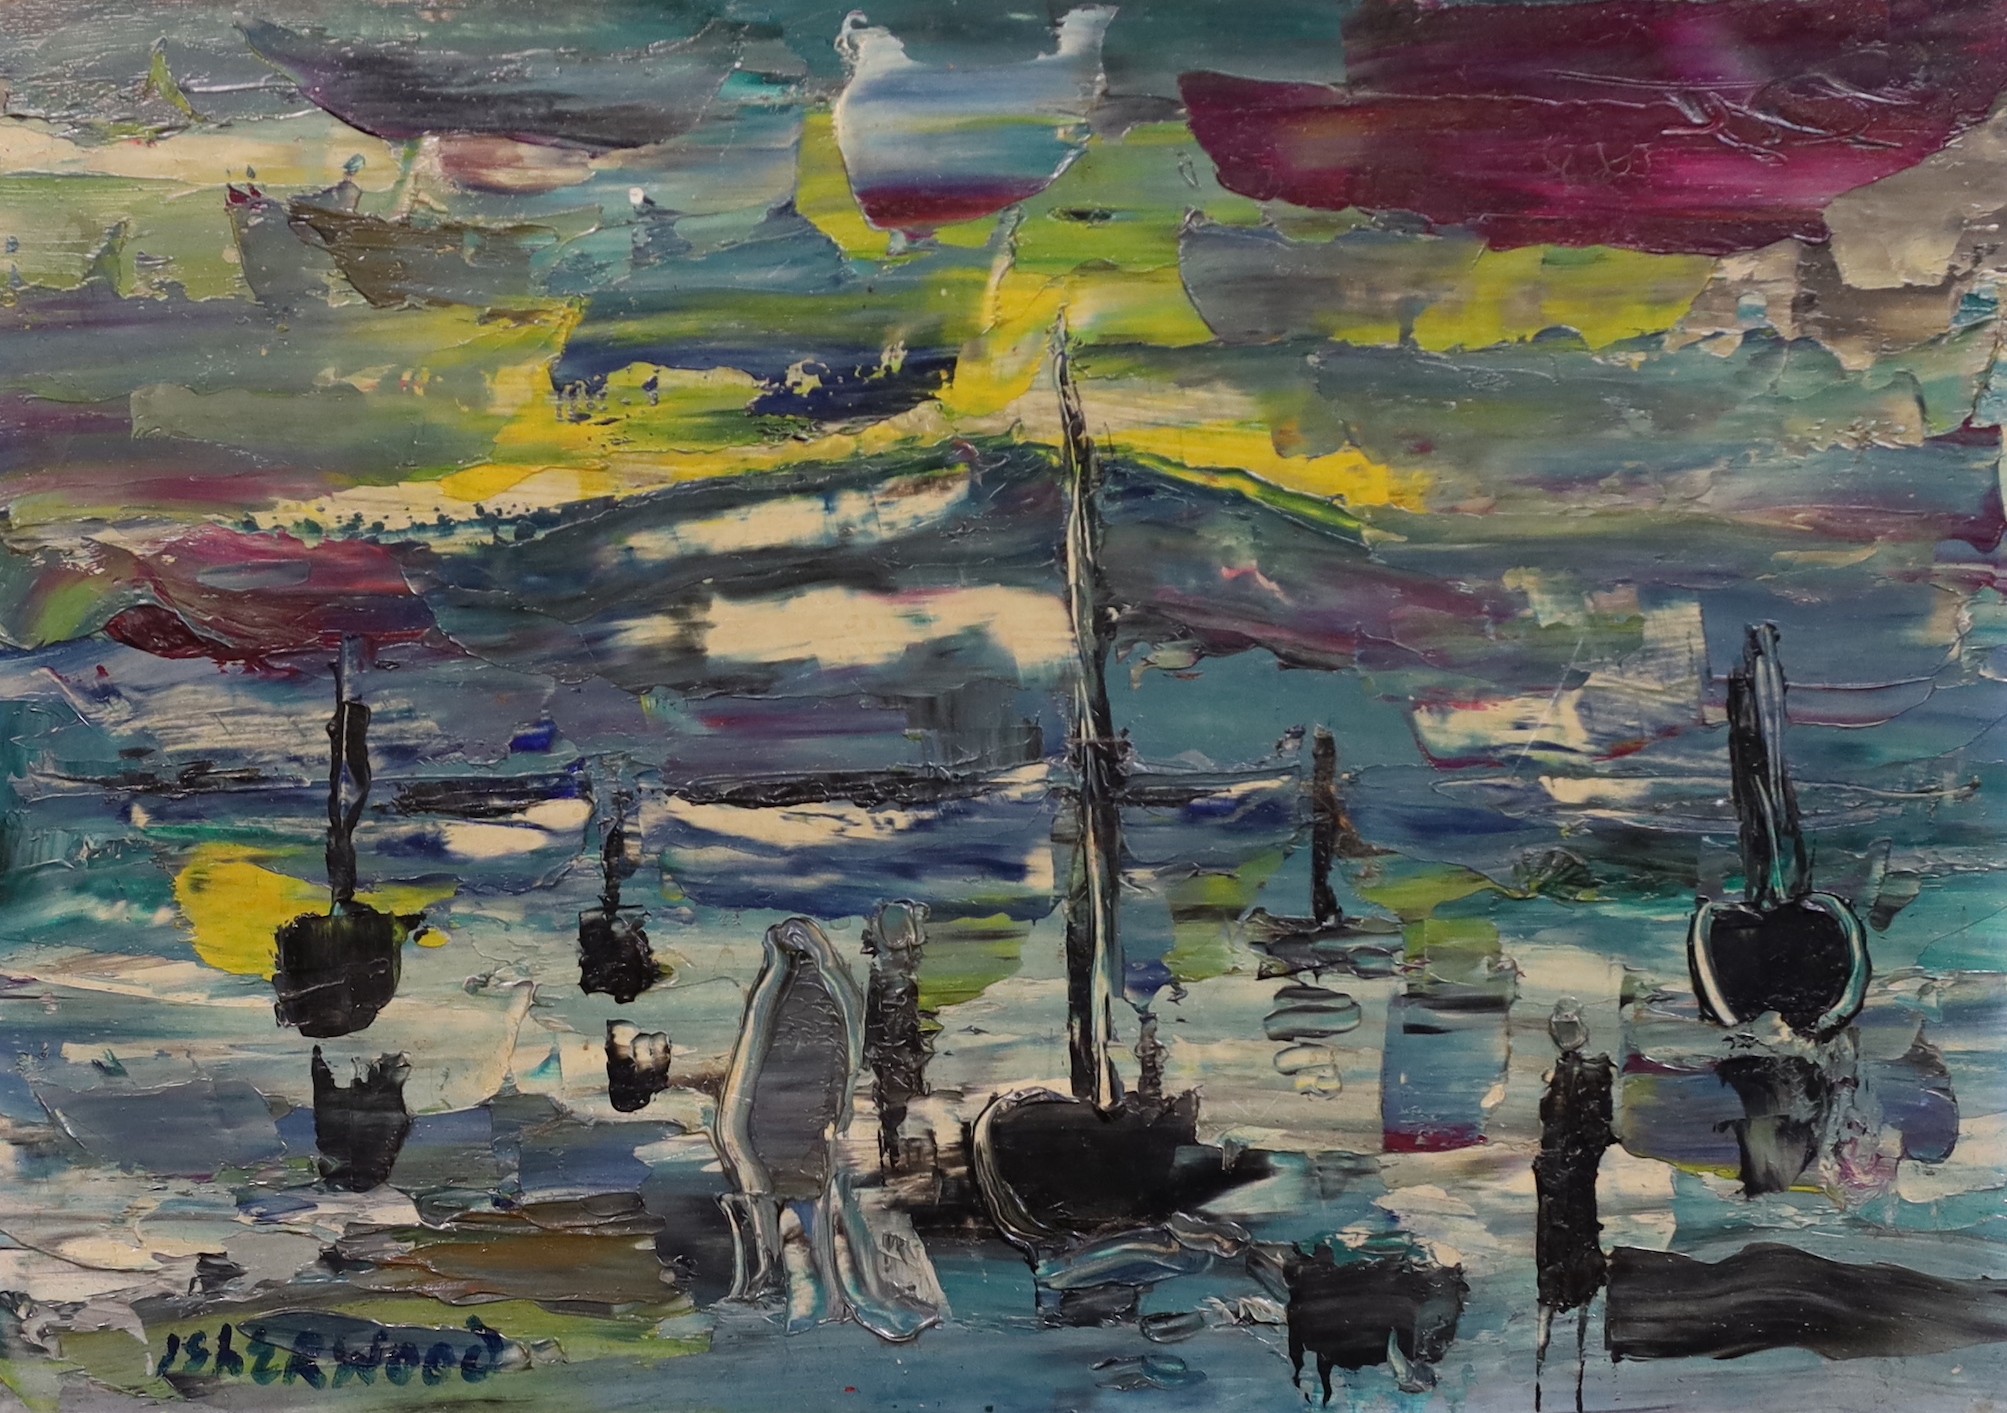 James Lawrence Isherwood (British, 1917- 1989), 'People at lake', oil on board, 24 x 34.5cm